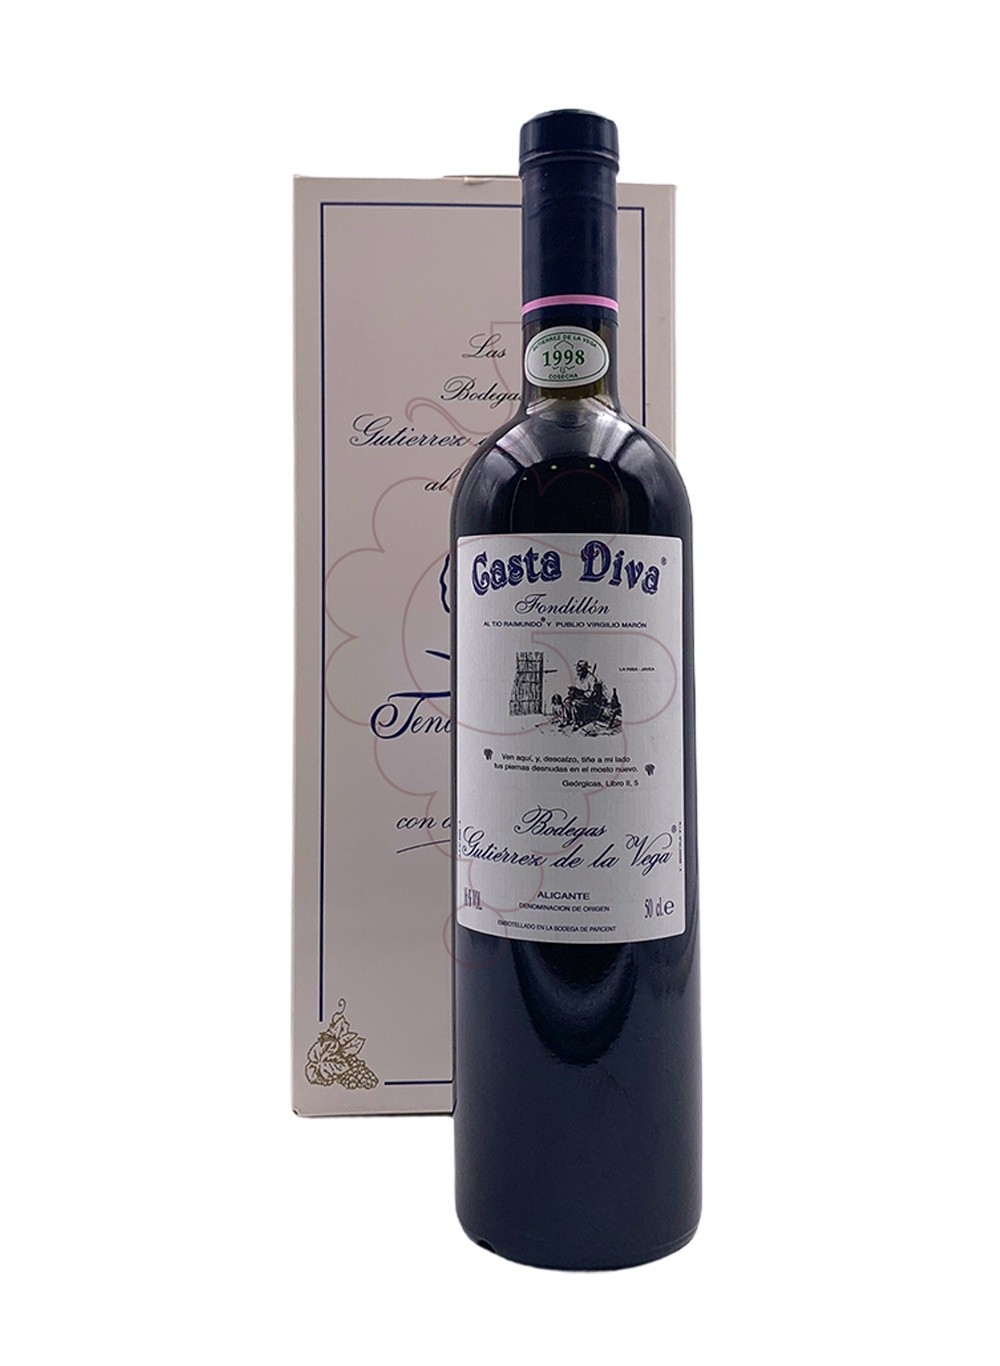 Photo Casta Diva Fondillon fortified wine